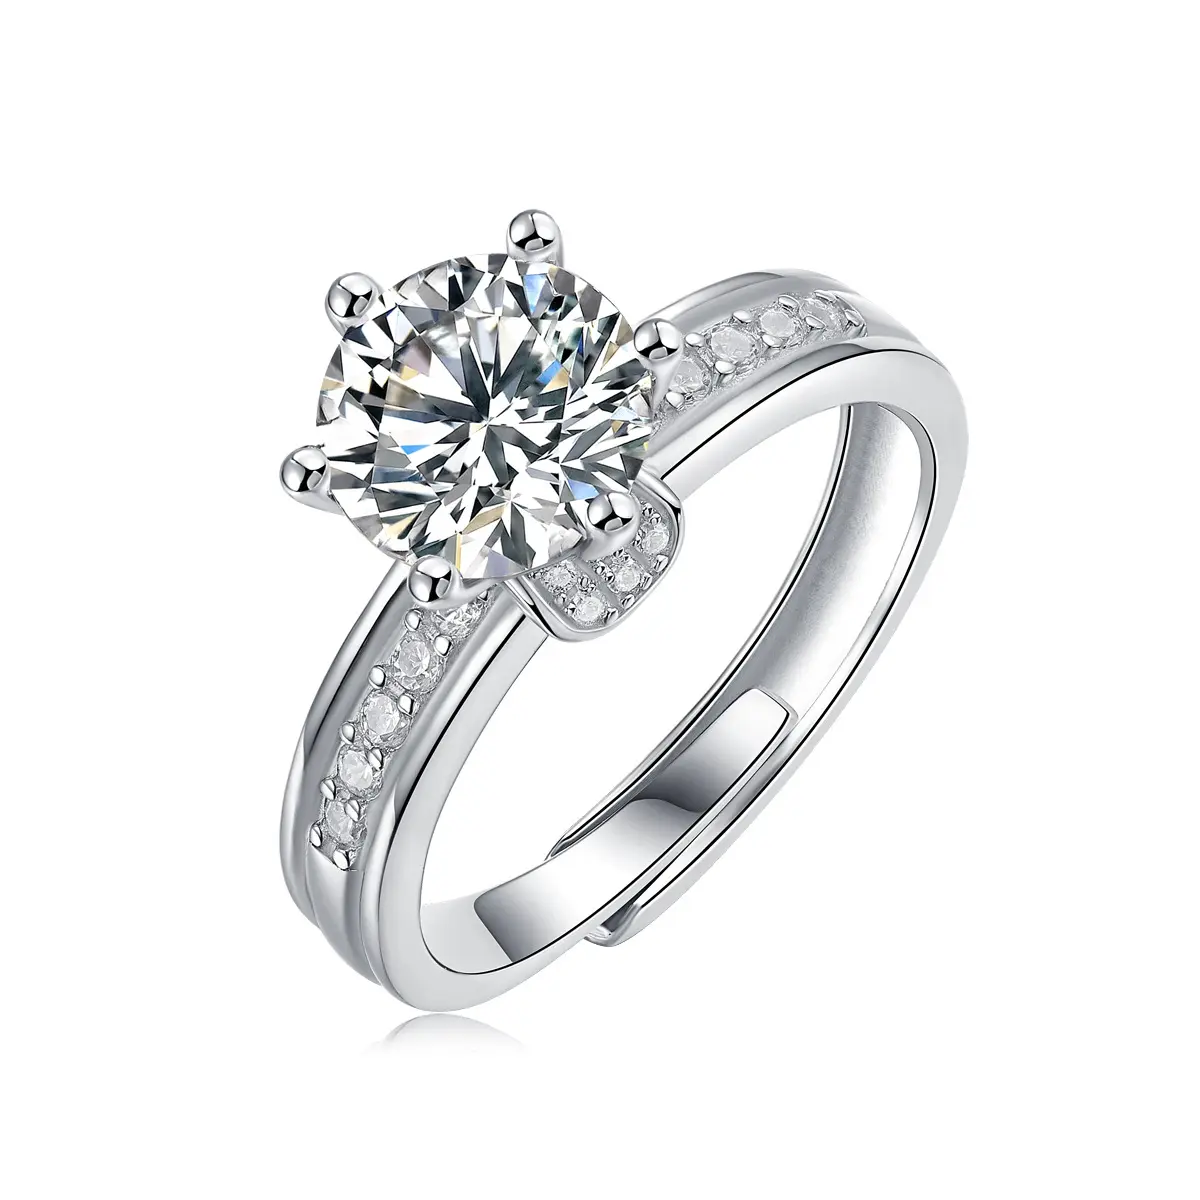 Adegan Modern 925 perak murni 1ct VVS warna D cincin berlian Moissanite cincin Aksesori dapat diatur pengaturan cakar wanita